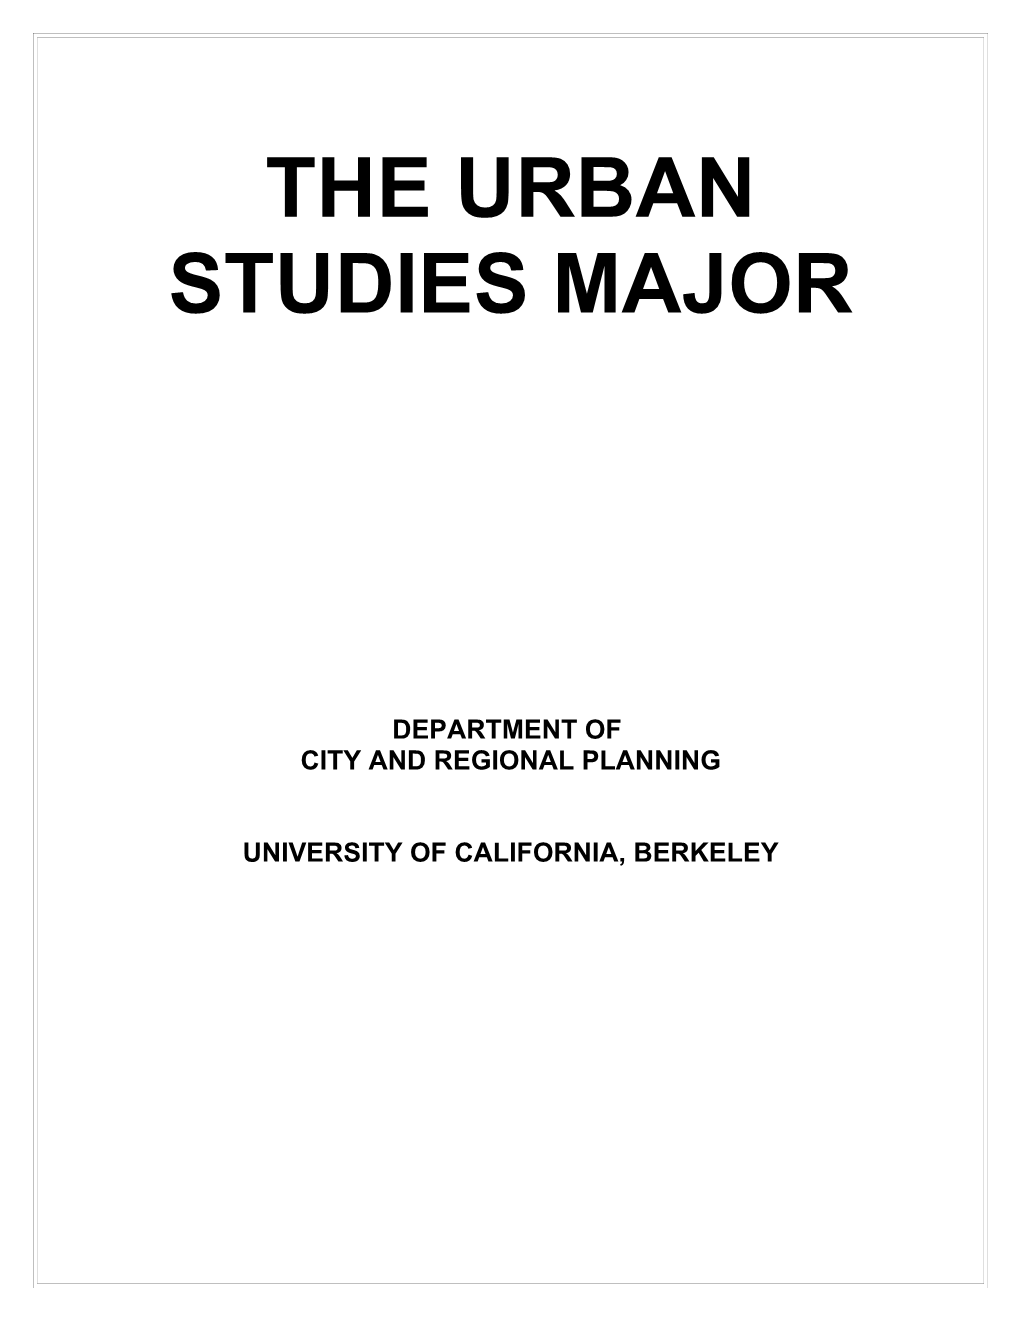 The Urban Studies Major